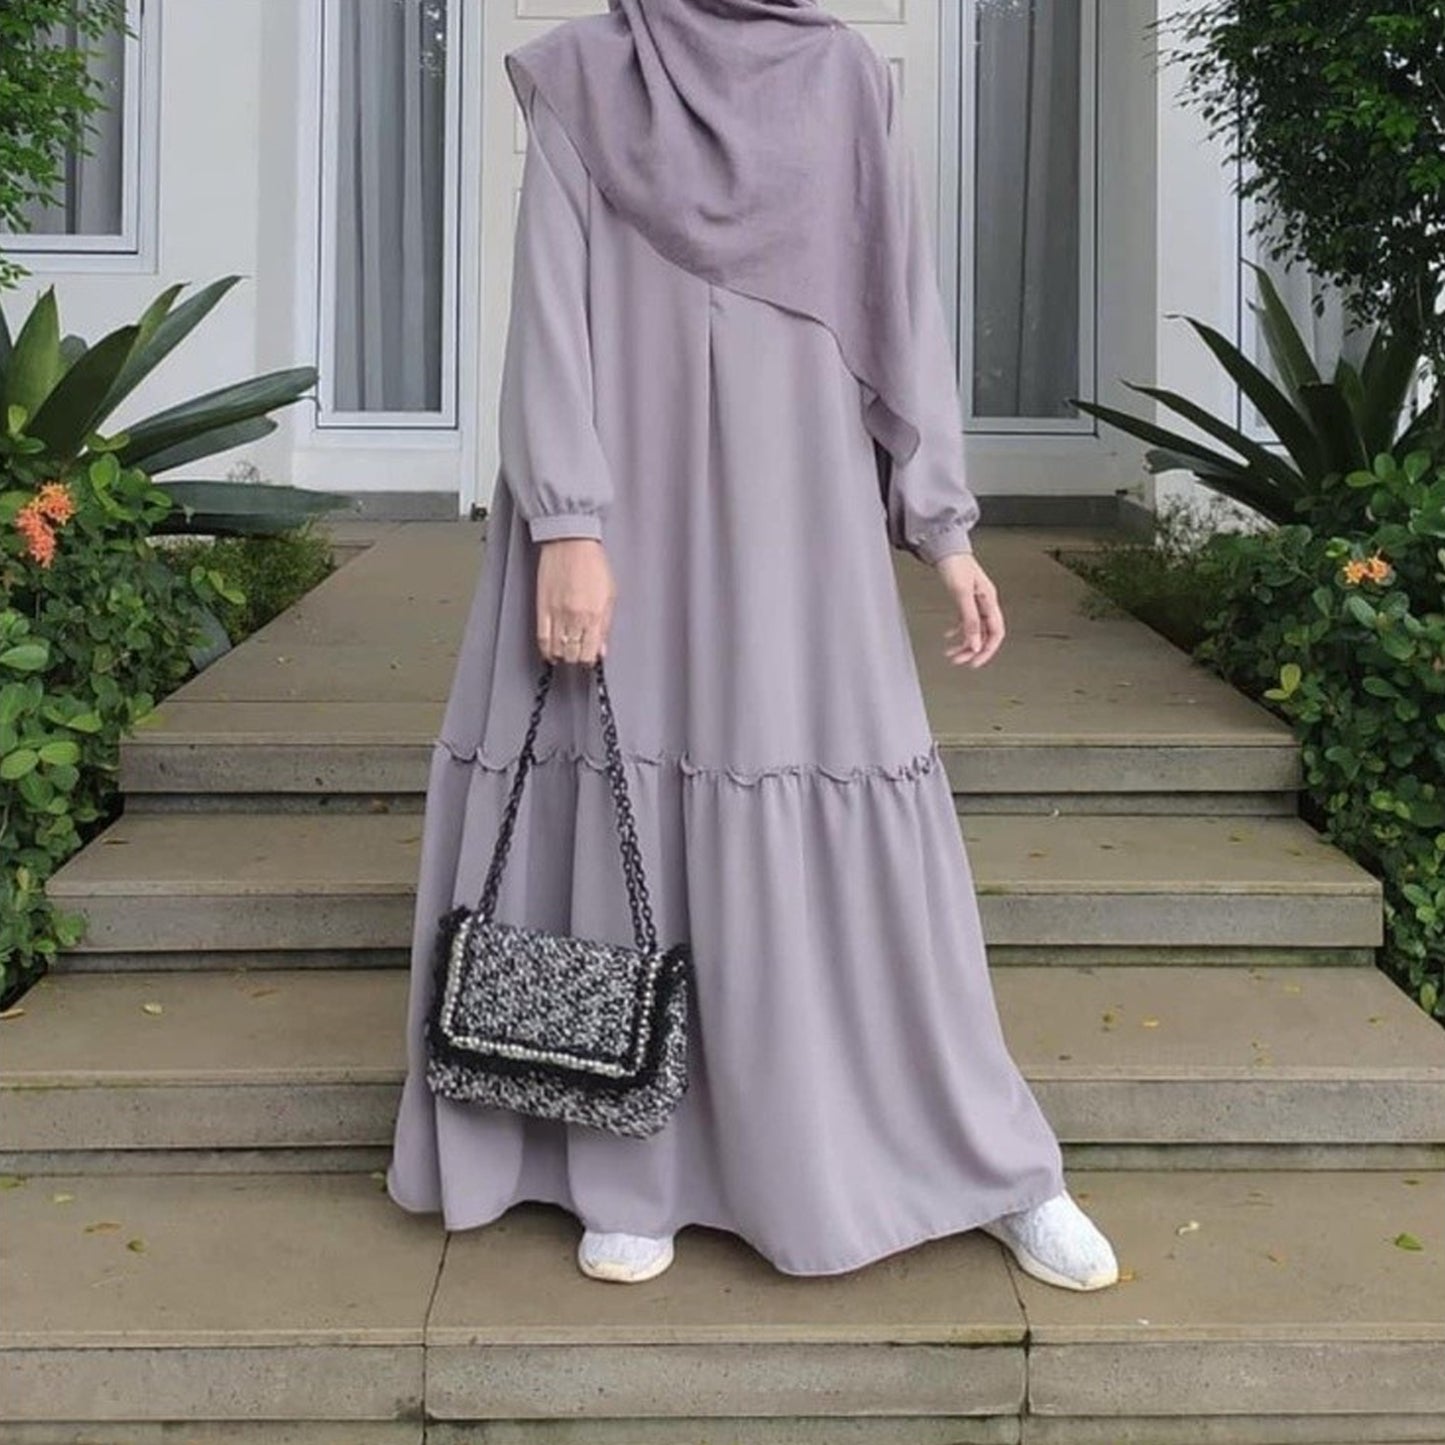 Elegante ruches: Jovina Maxi-jurk Rempel voor modebewuste vrouwen, islamitische jurk, Khimar-jurk, moslimjurk, islamitische jurk, damesjurk